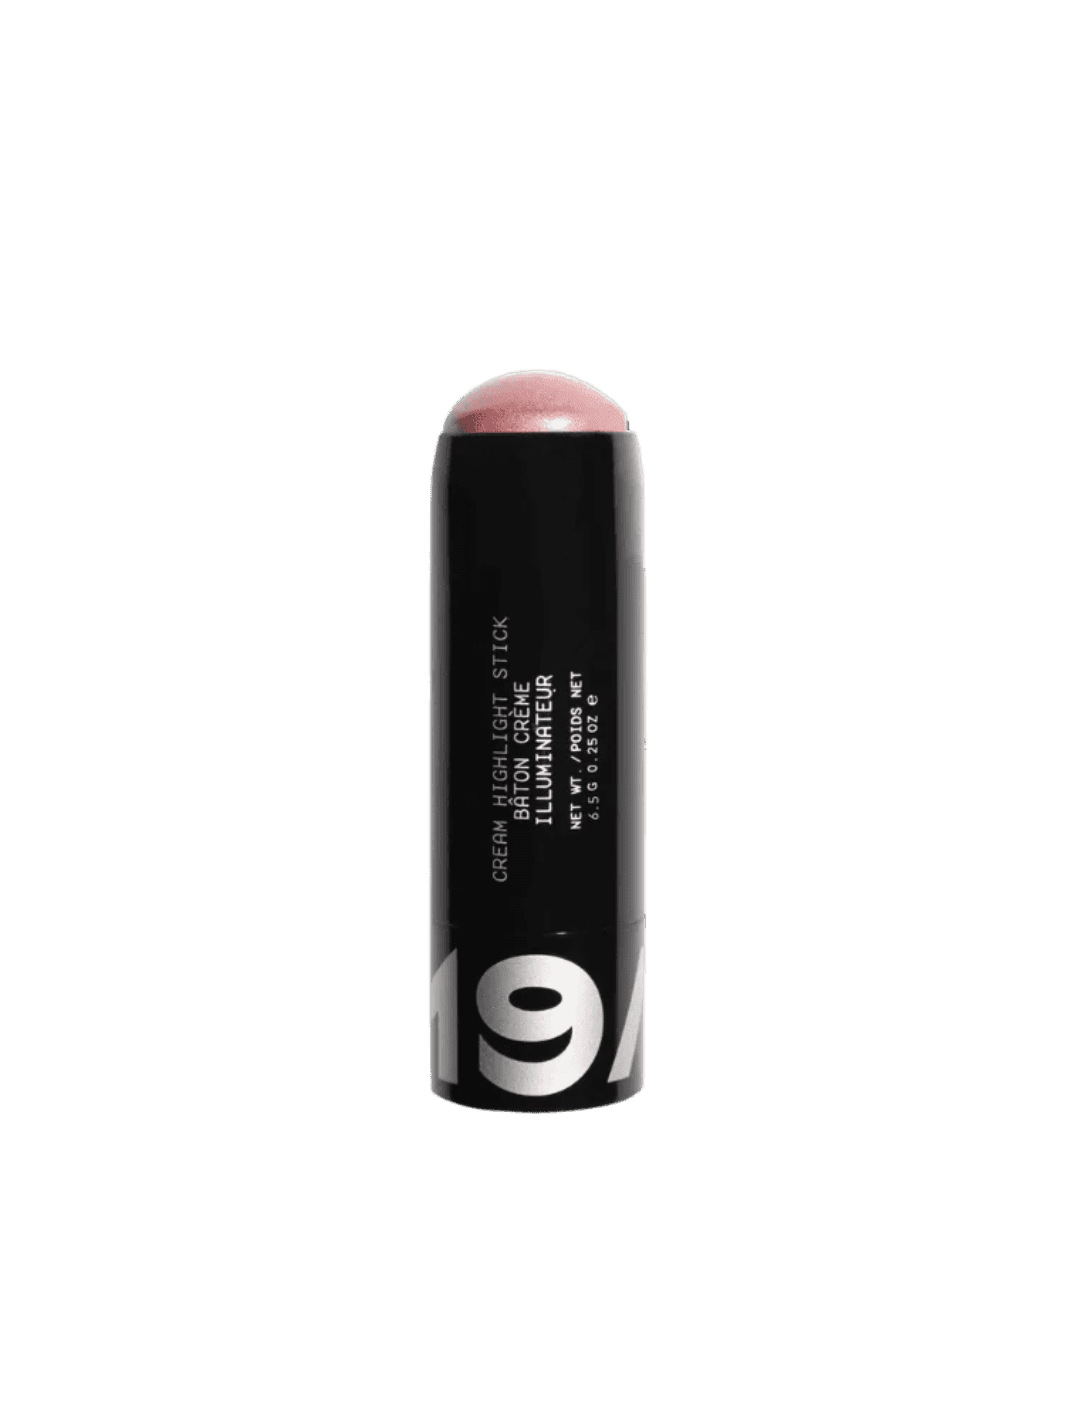 19/99 Beauty Cream Highlight Stick - Perla | Twentyseven Toronto